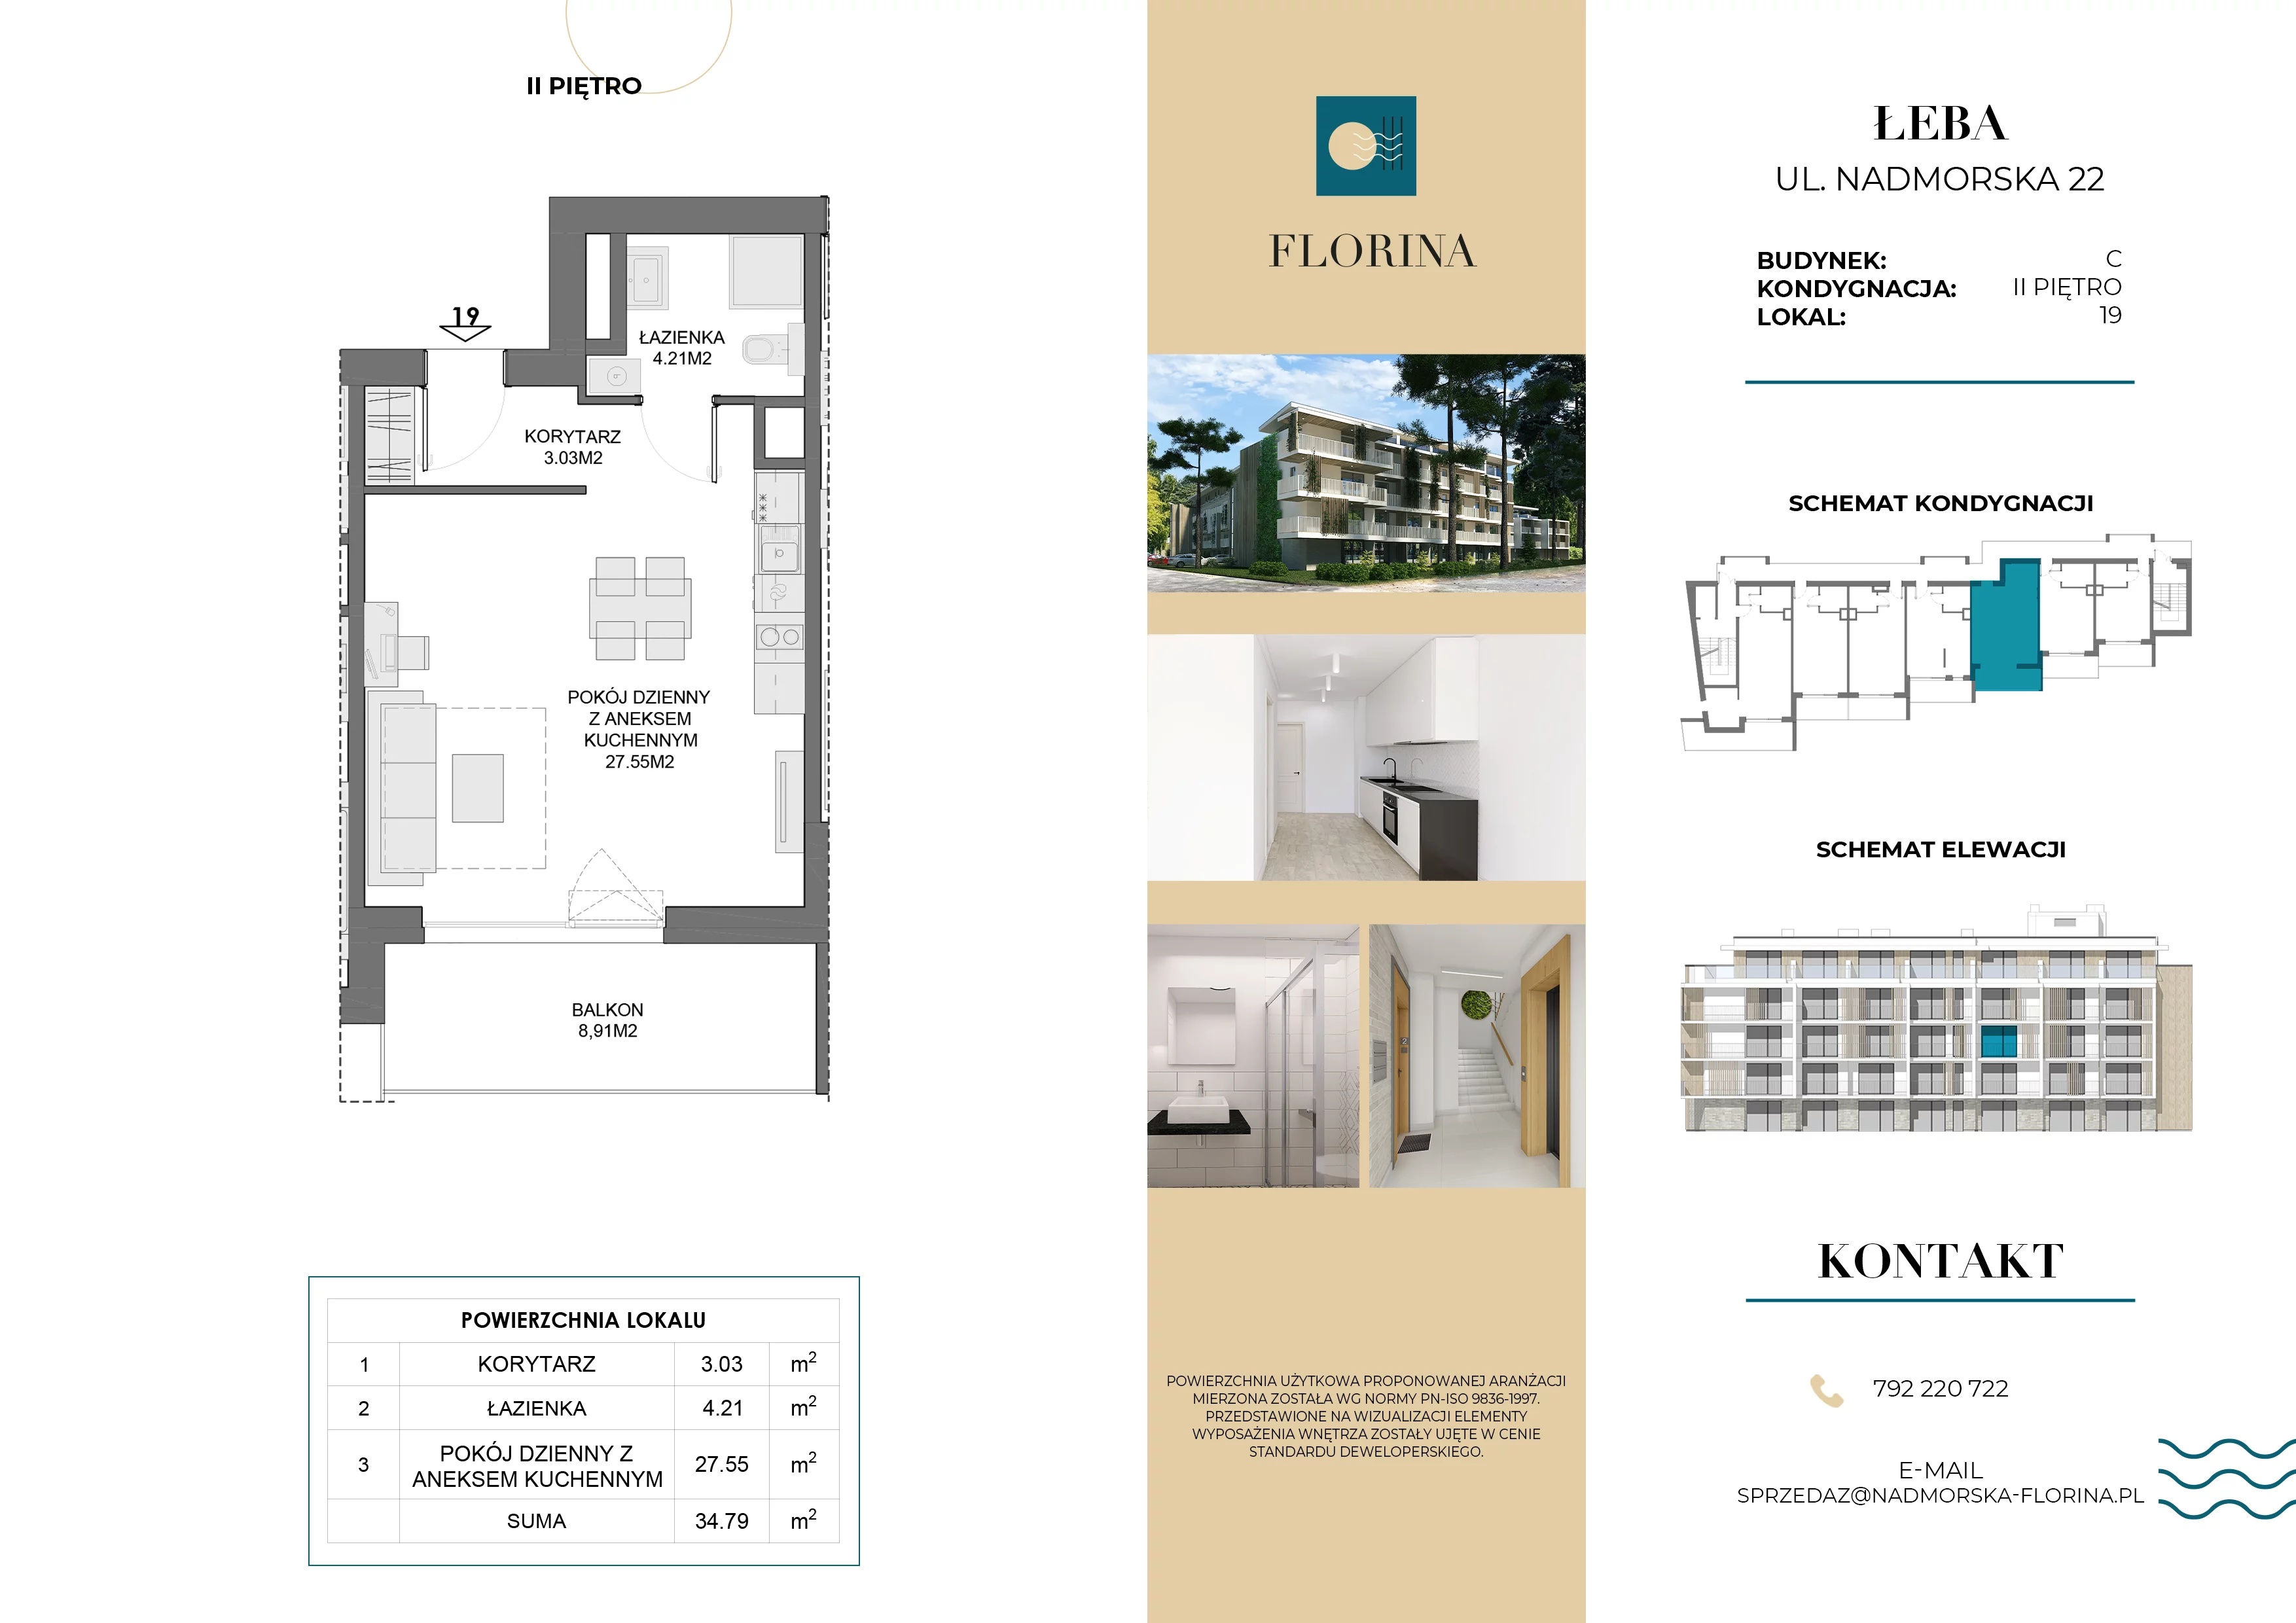 Apartament inwestycyjny 34,79 m², piętro 2, oferta nr C.M19, Nadmorska Florina, Łeba, ul. Nadmorska